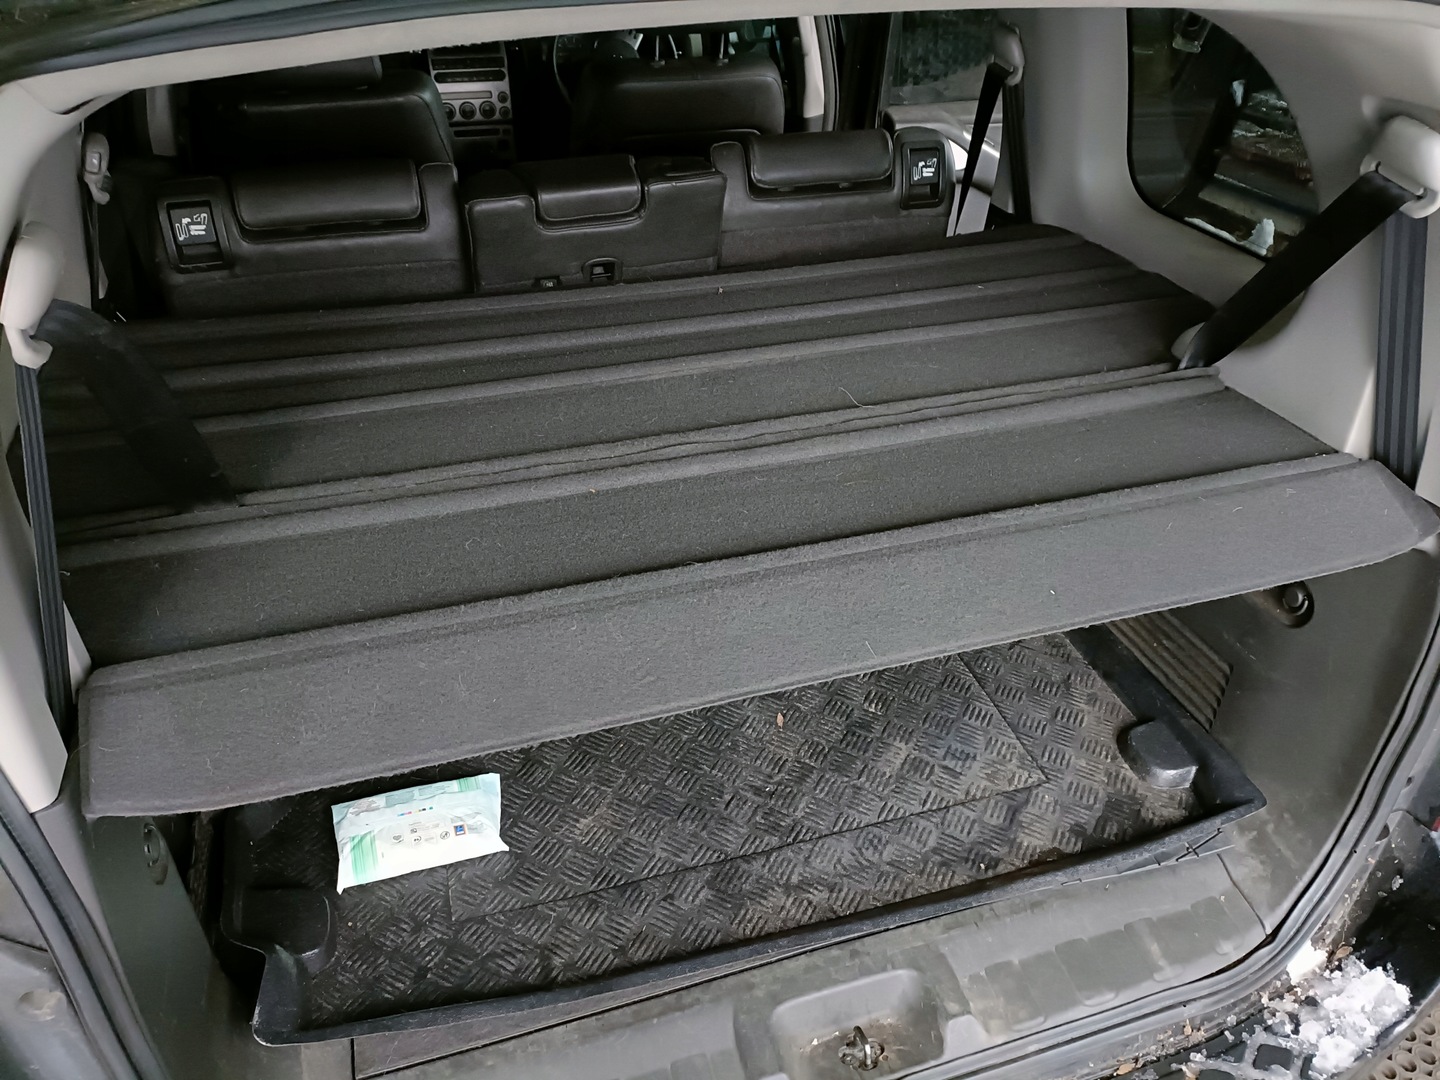 XDALYS rear r51 shelf blind part pathfinder nissan Car Online❱ Roller - trunk